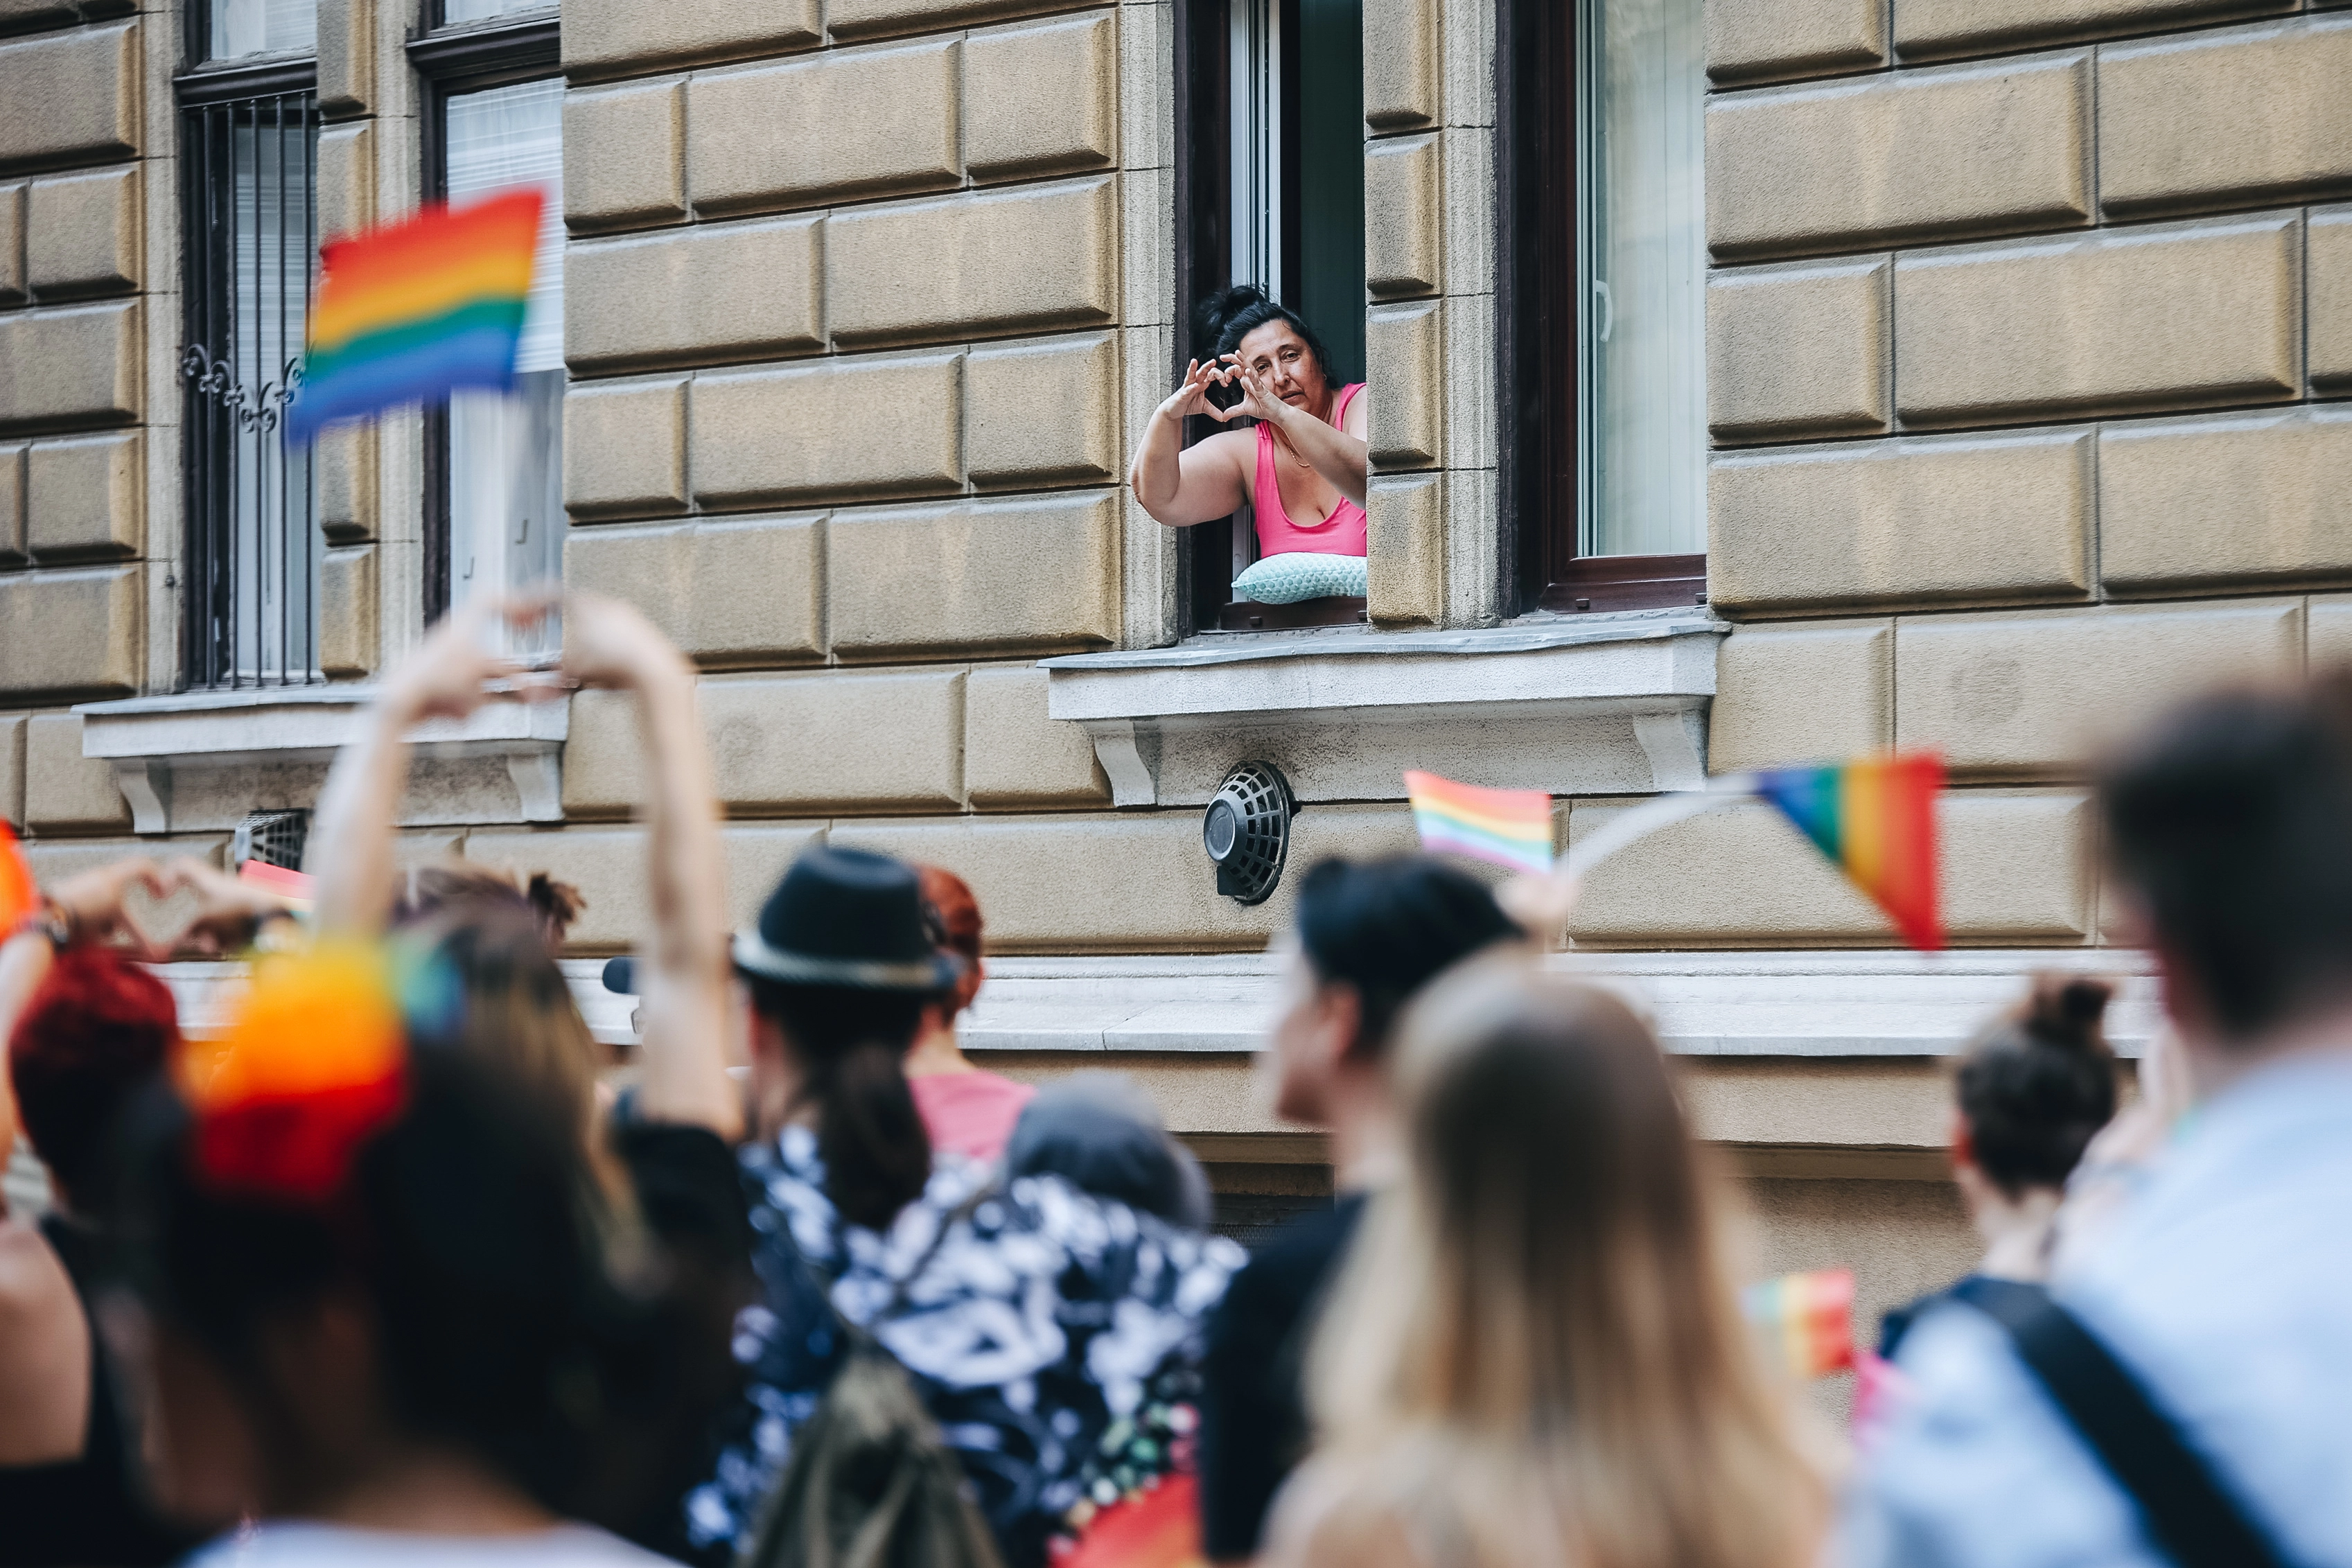 Képeink a 28. Budapest Pride felvonulásról